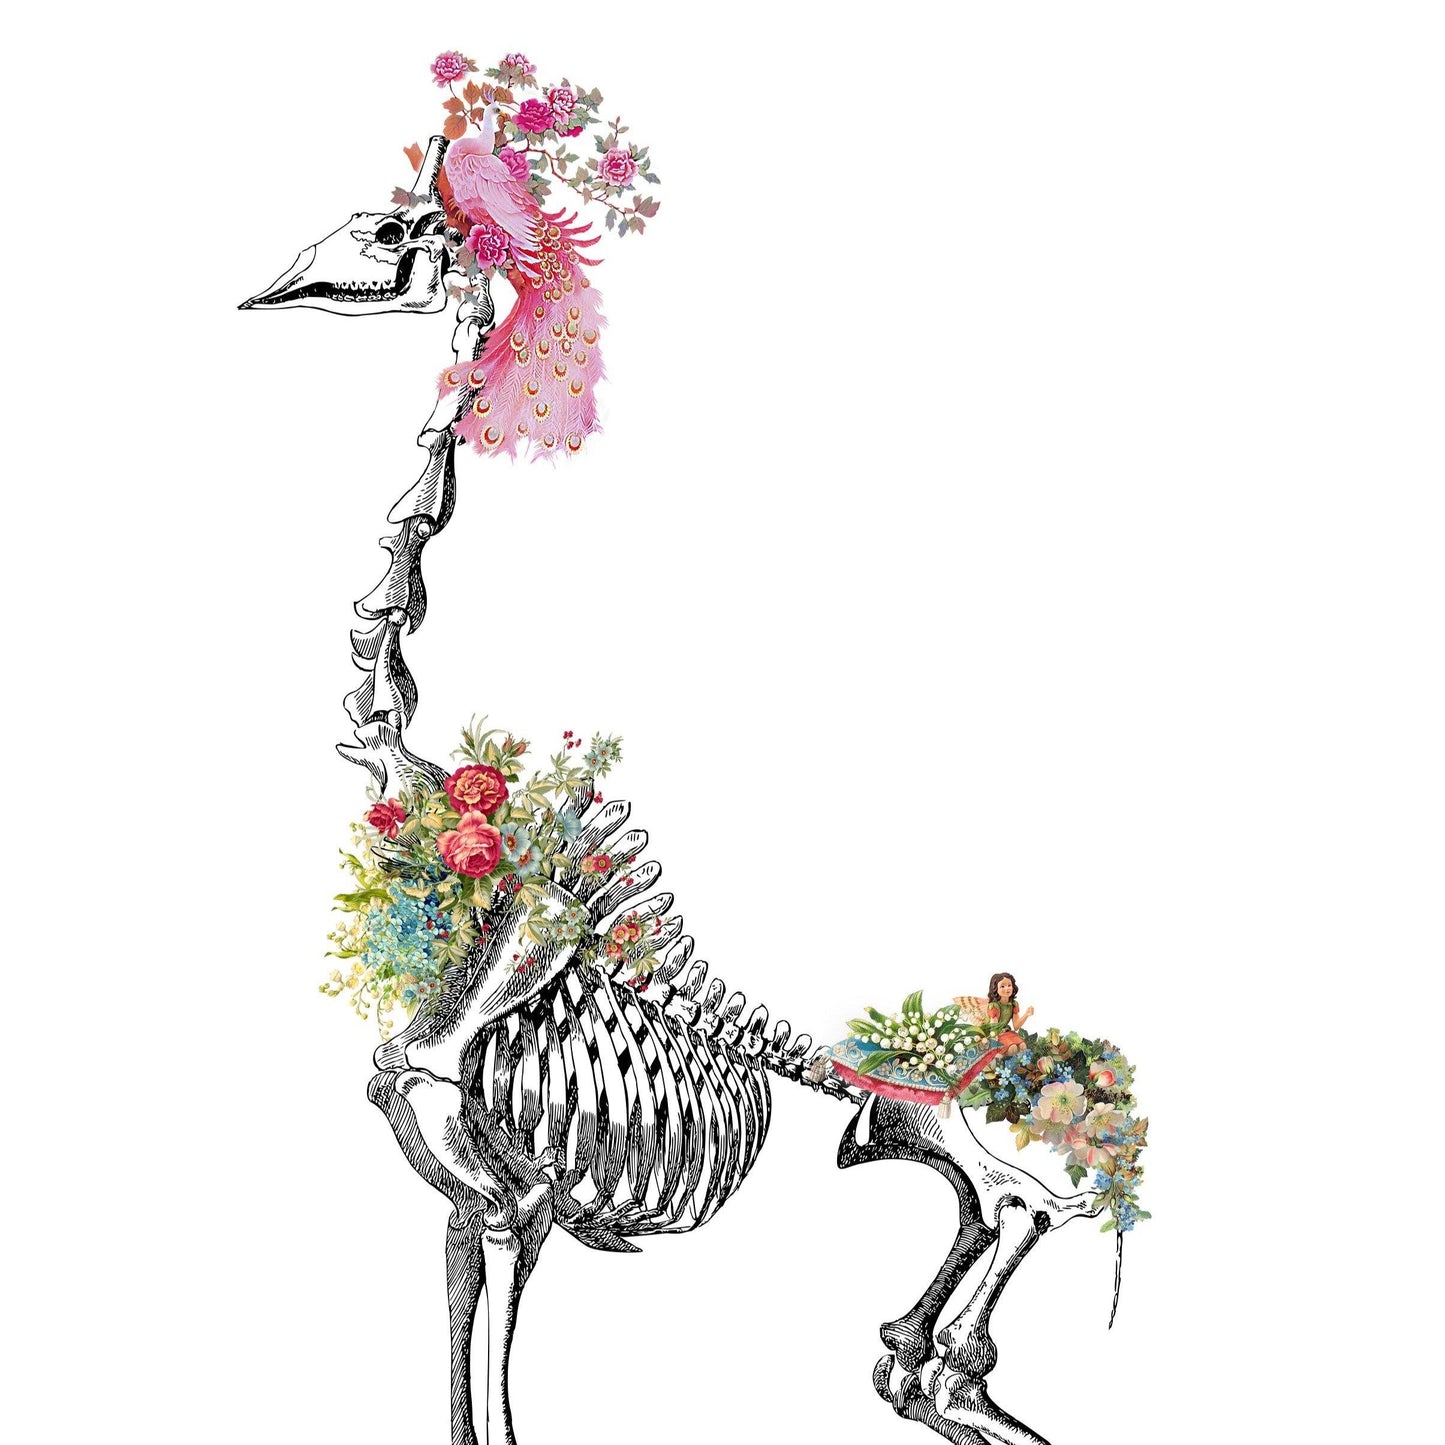 Giraffe Skeleton Anatomical Flowers | Anatomical Body Print | Flower Art Print | Illustration Poster - 98types